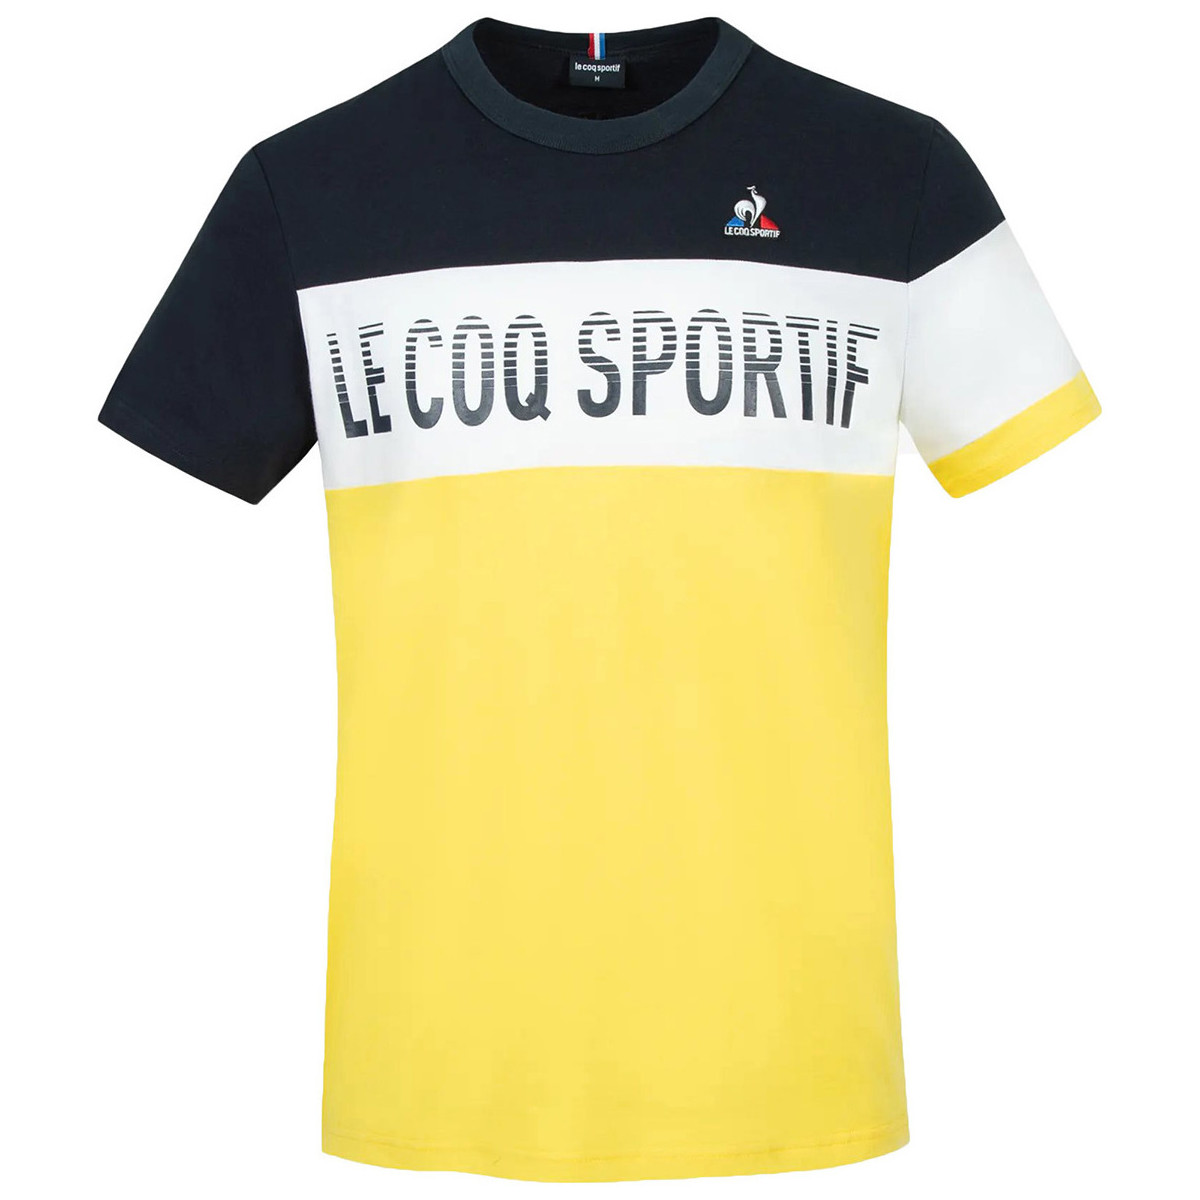 Textiel Heren T-shirts korte mouwen Le Coq Sportif Saison 2 Tee Blauw